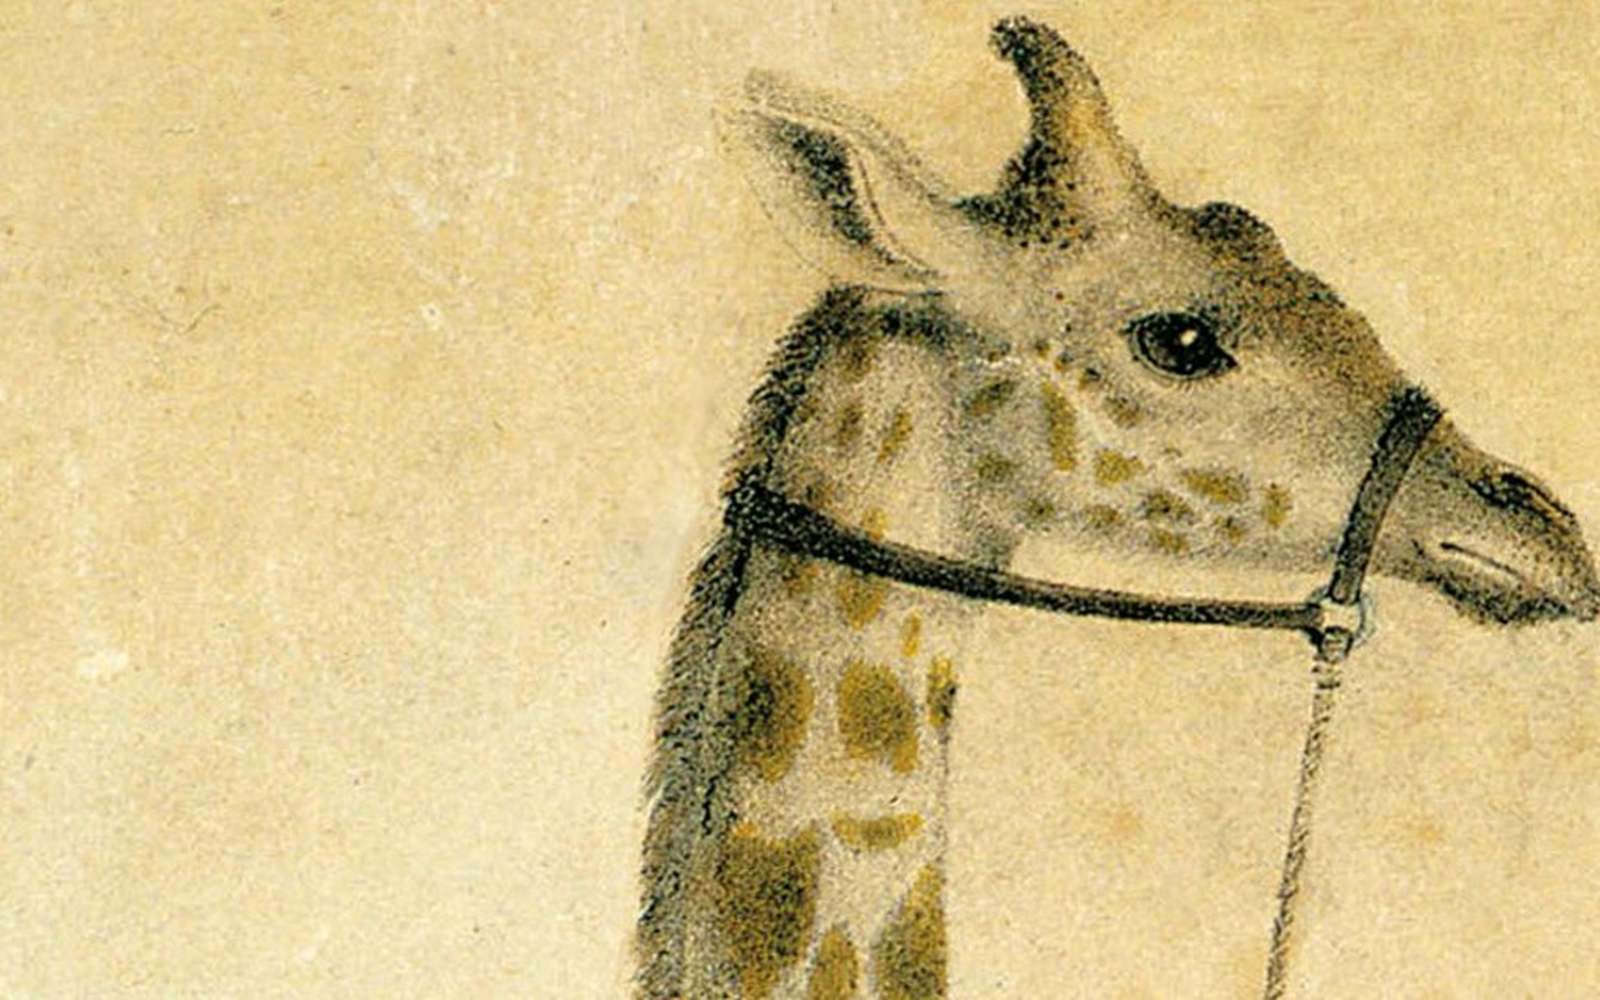 Podcast : Zarafa, une girafe à Paris